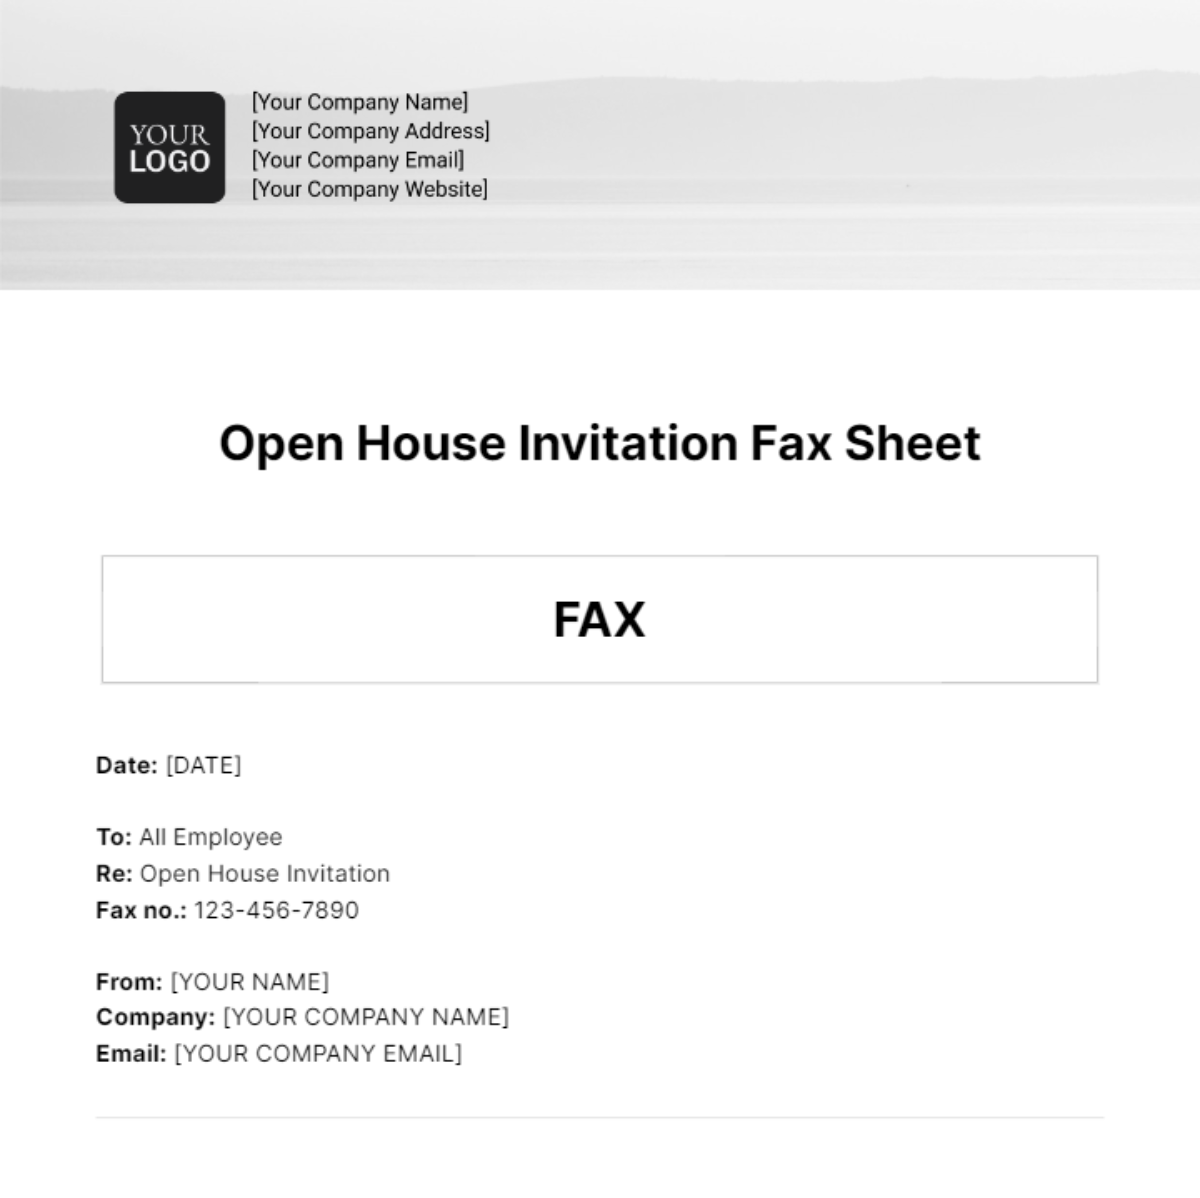 Open House Invitation Fax Sheet Template